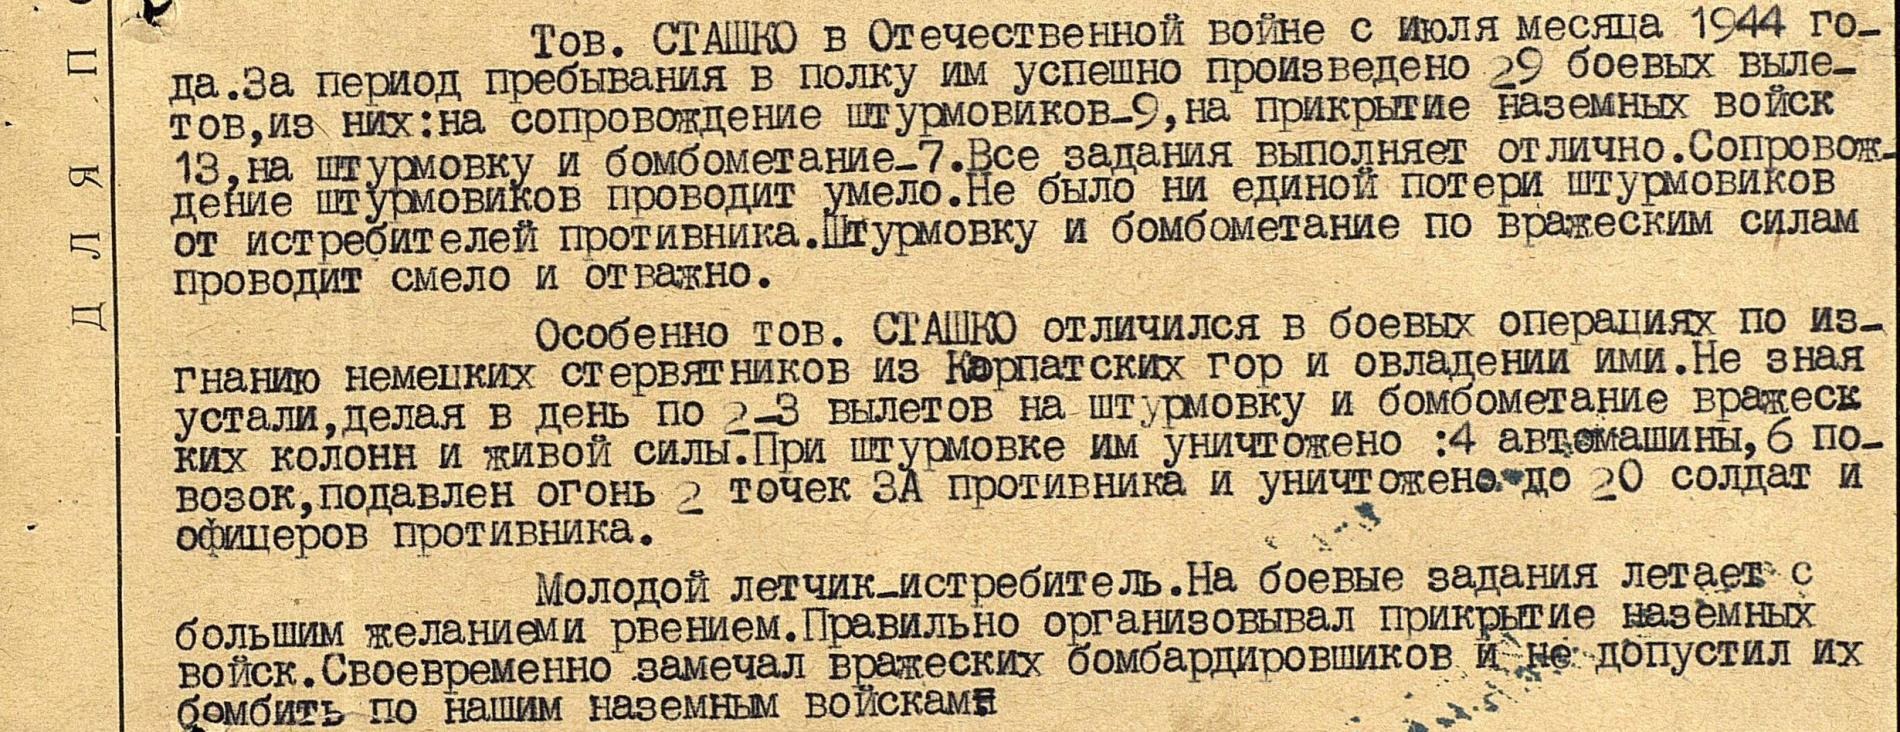 Описание подвига из наградного листа Гв. лейтенанта Василия Сташко.